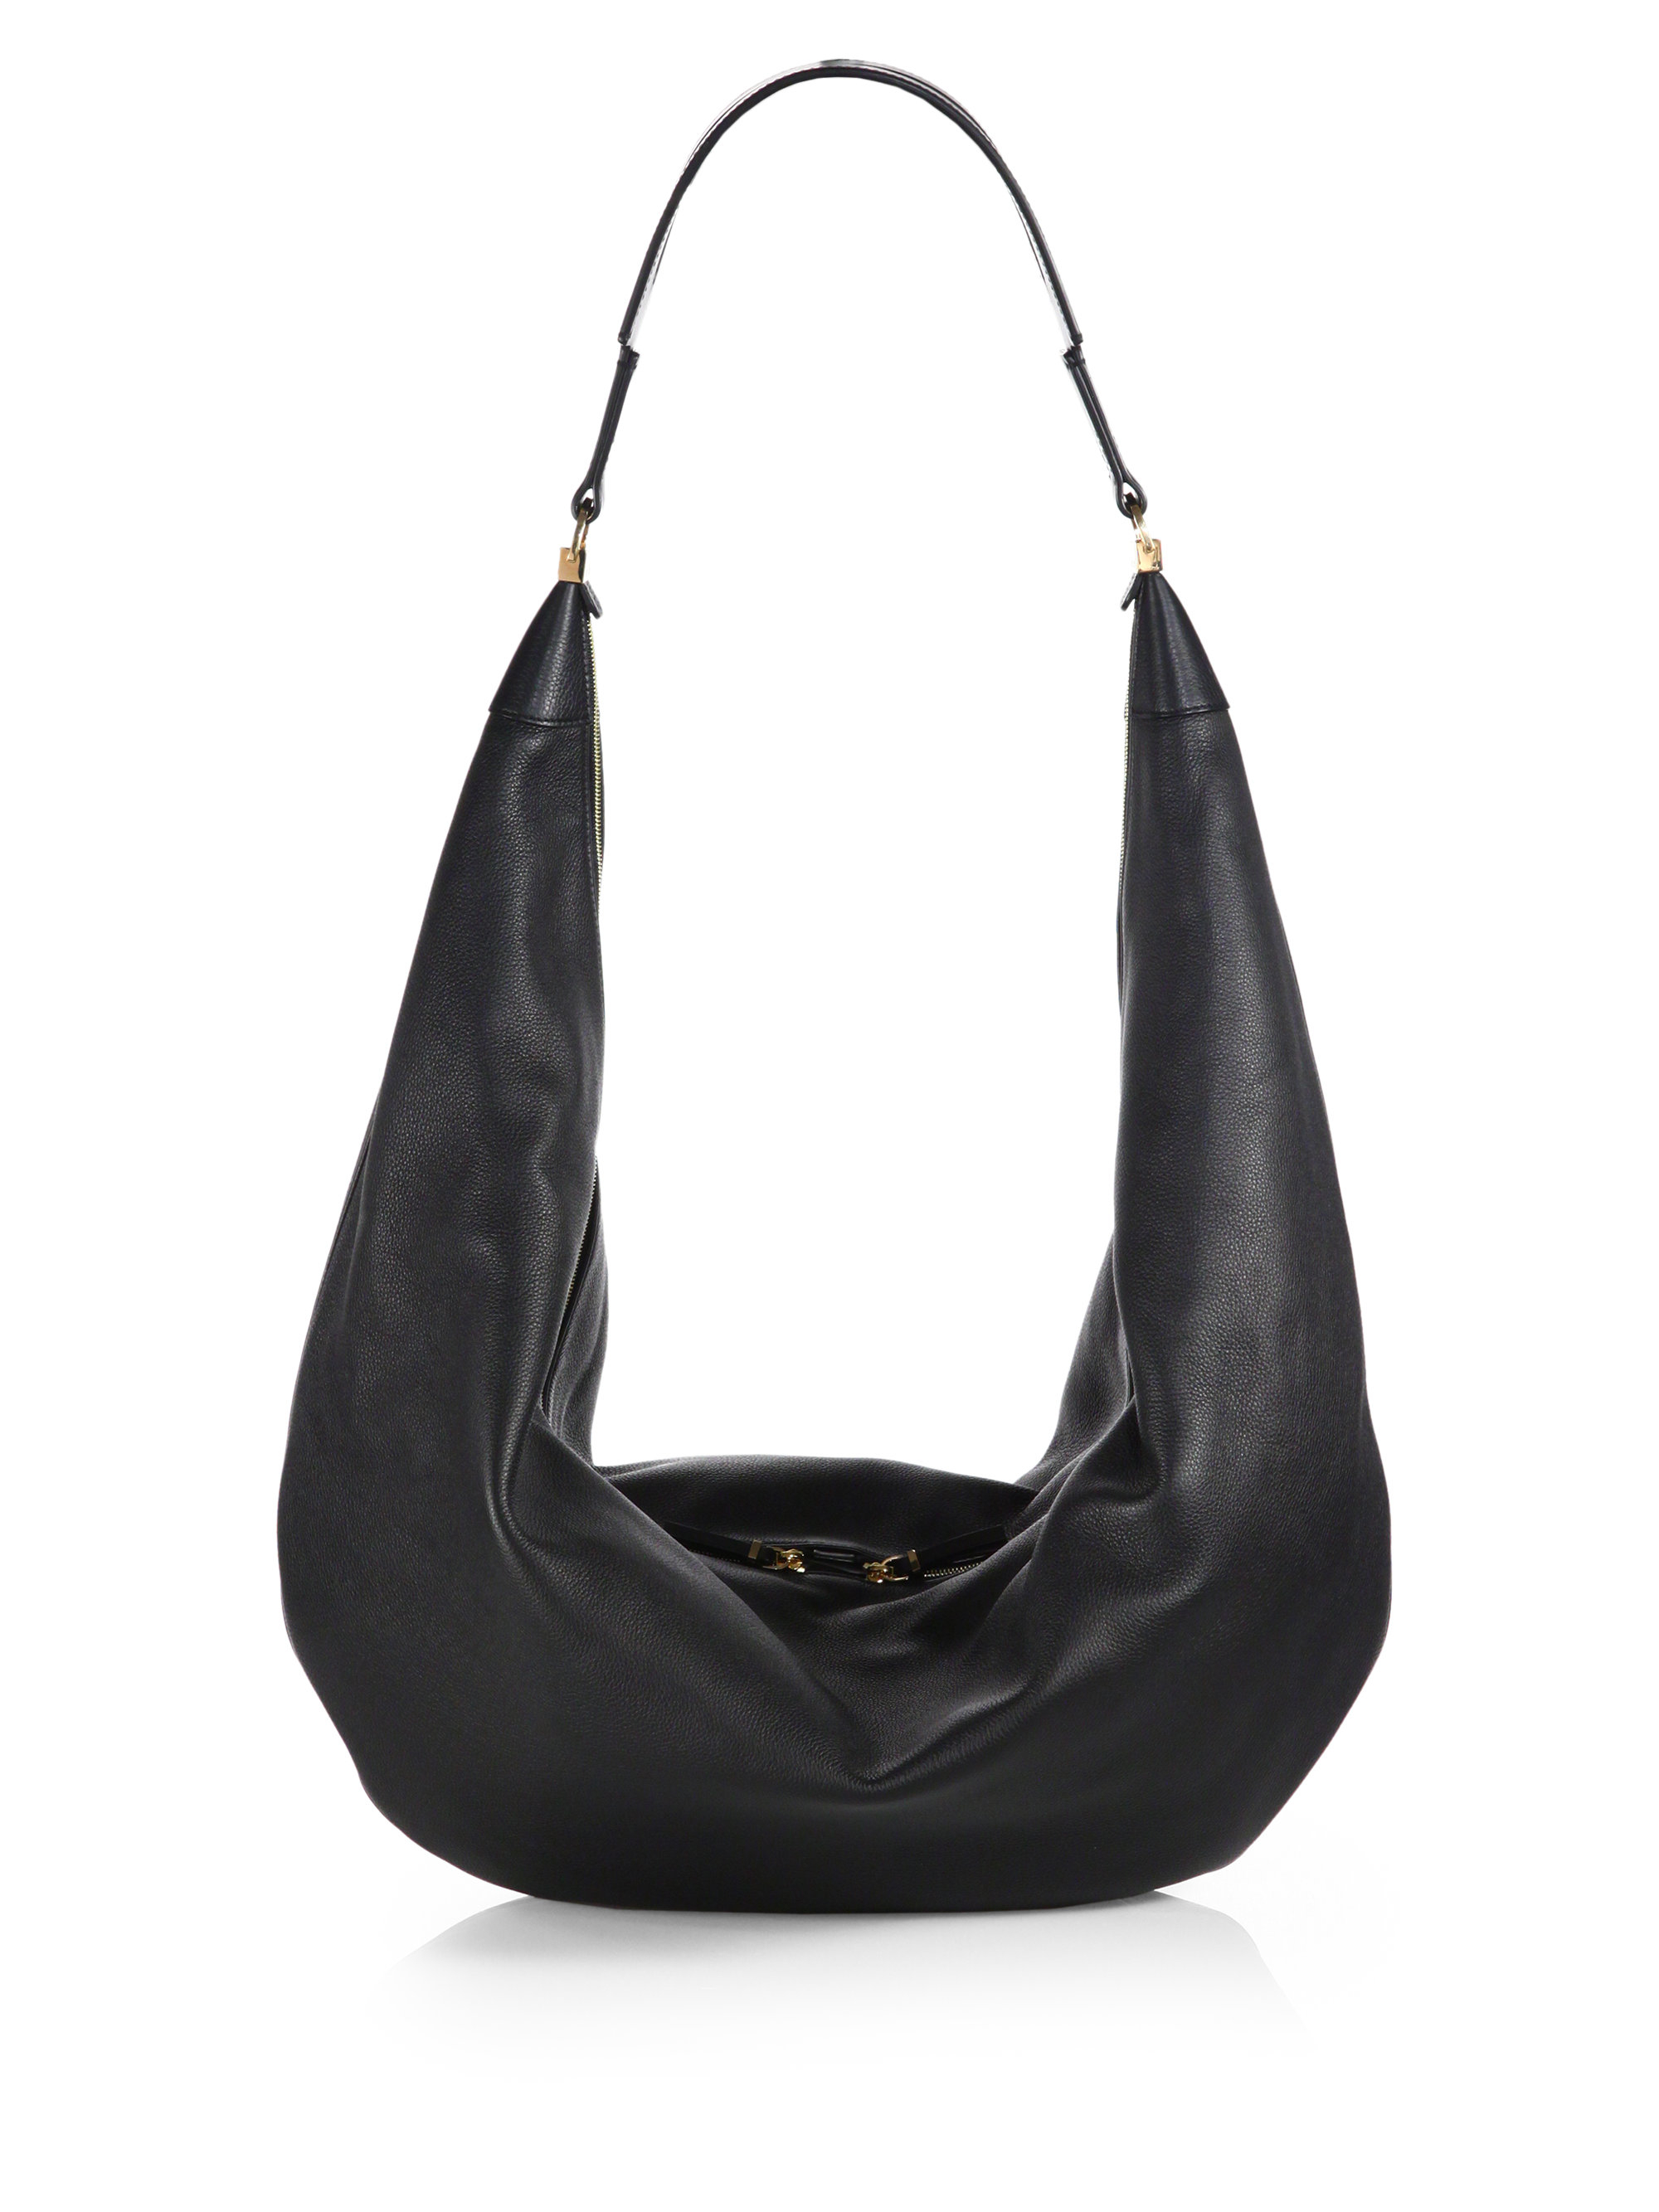 Lyst - The Row Sling 15 Hobo Bag in Black